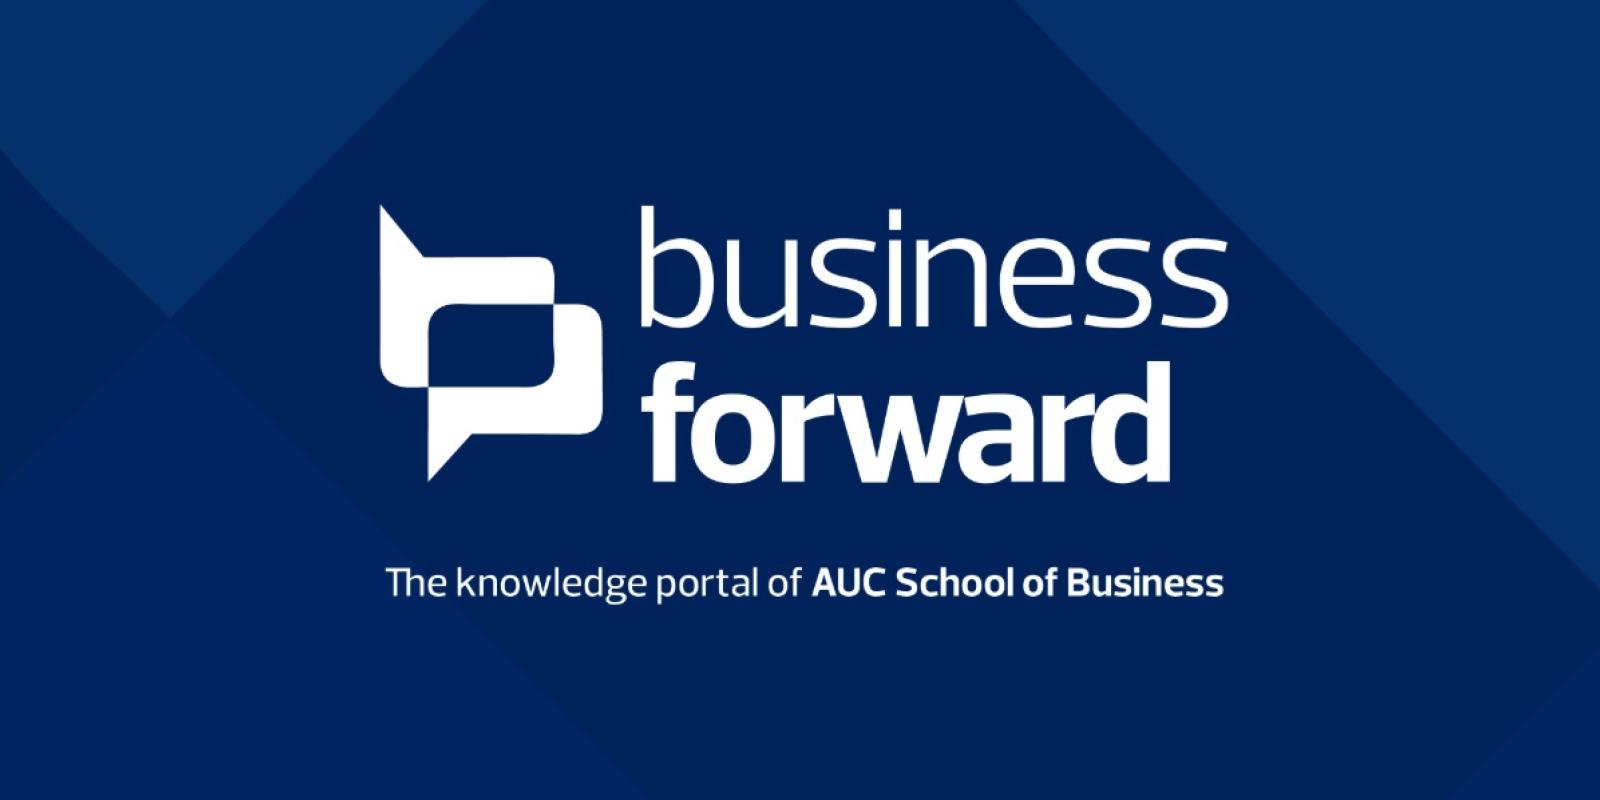 Business Forward logo